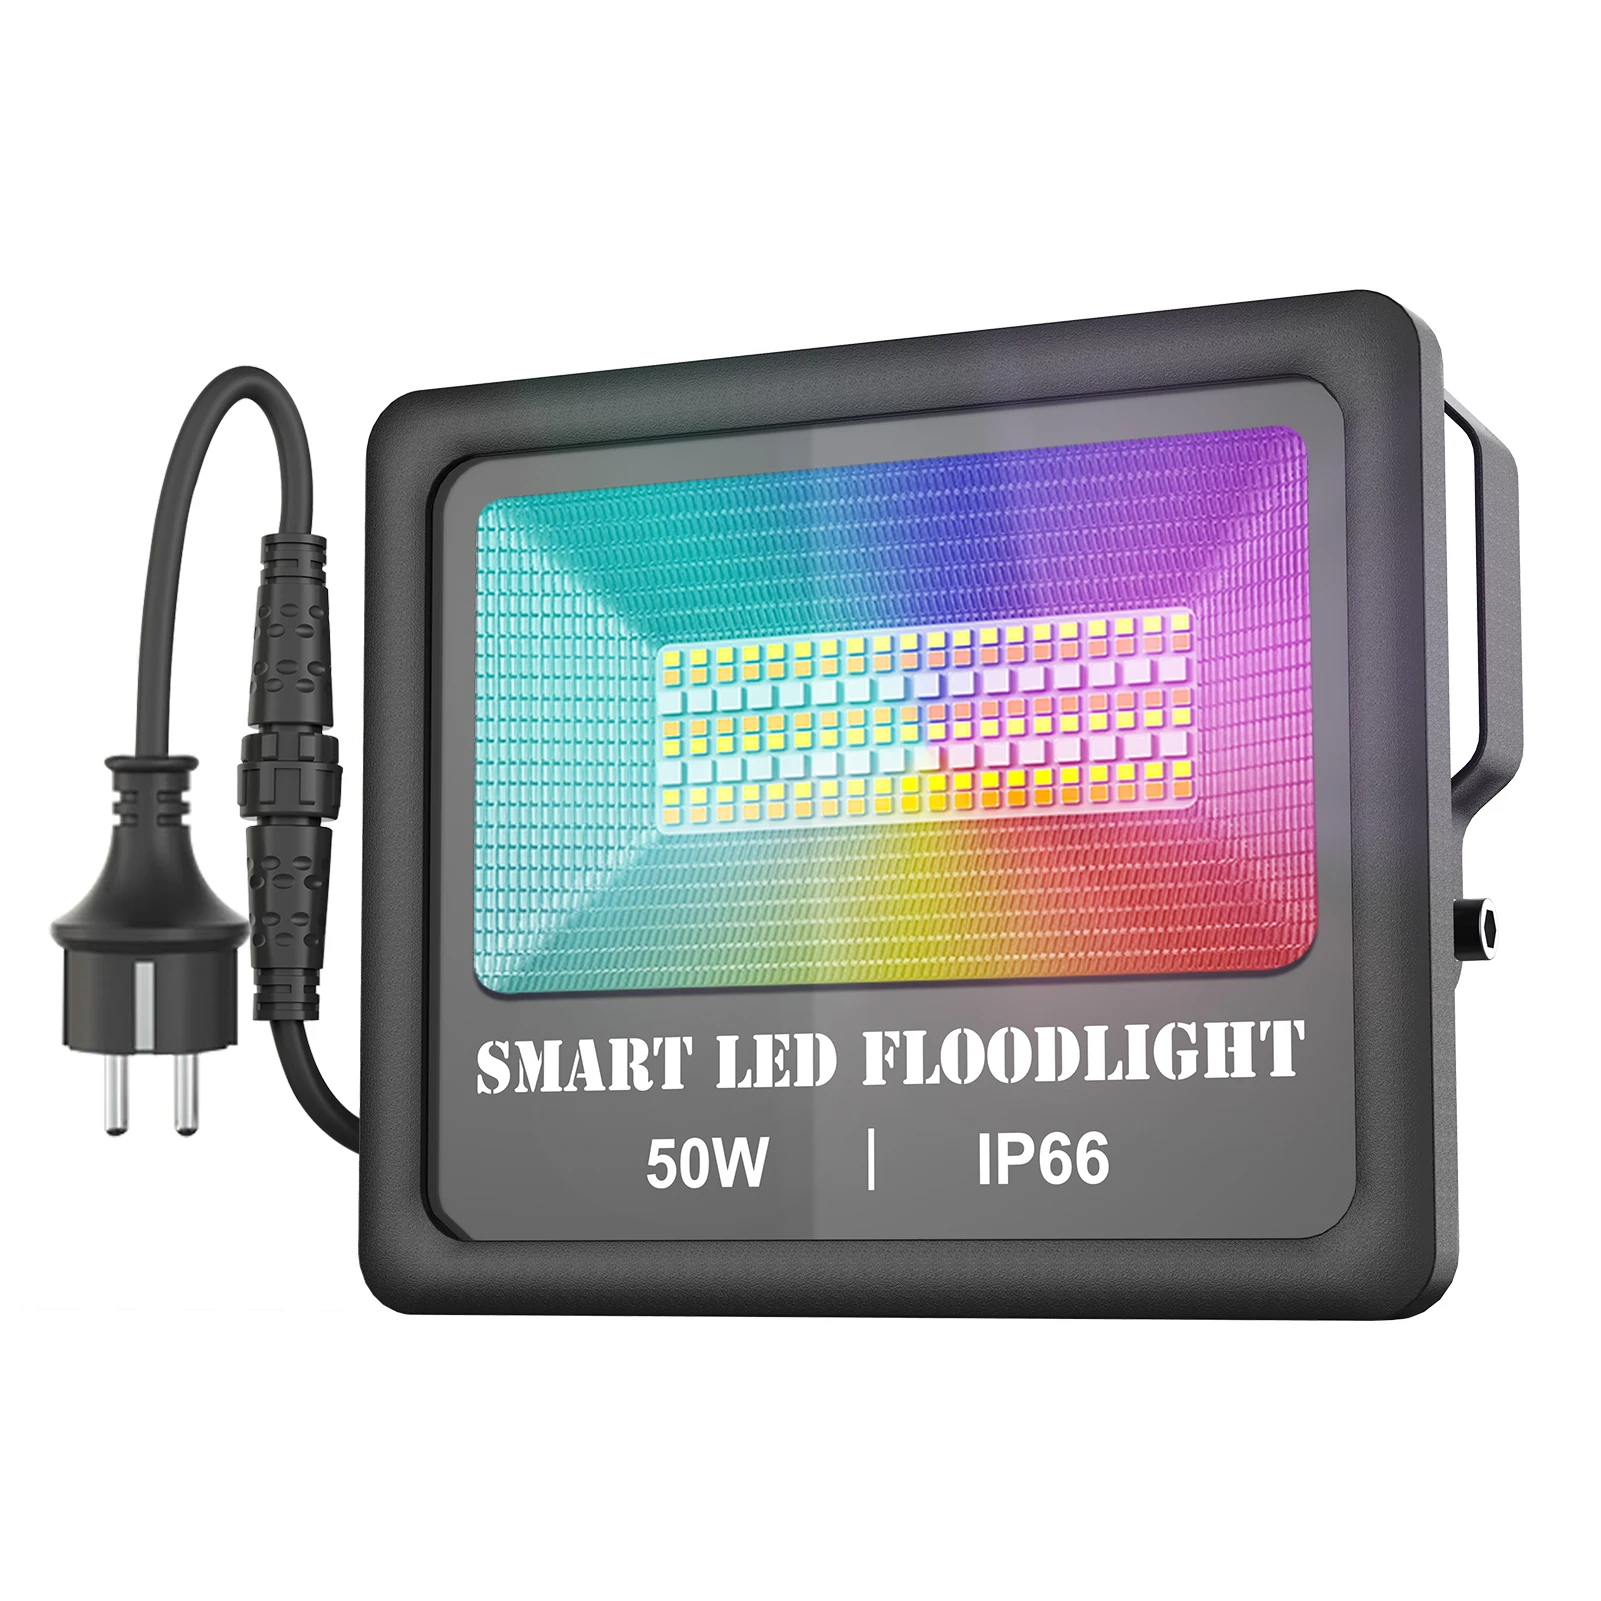 

100-240 V 50W BT Connected Connection LEDs Flood Light Spot Lamp IP66 Portable for Restaurant Cafe Shop Aisle Corridor Garden